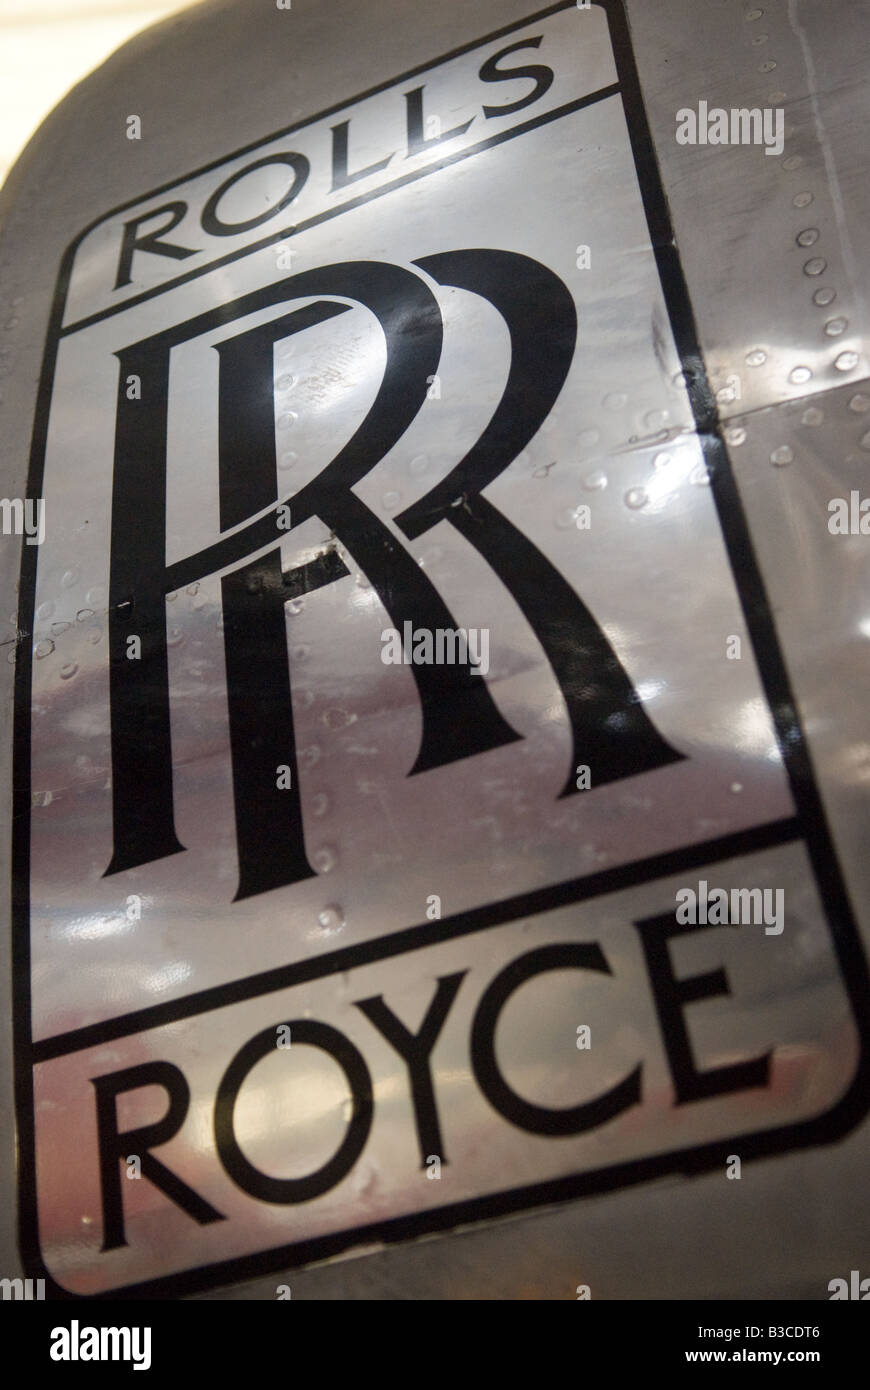 Rolls Royce logo on Jet Engine Stock Photo - Alamy